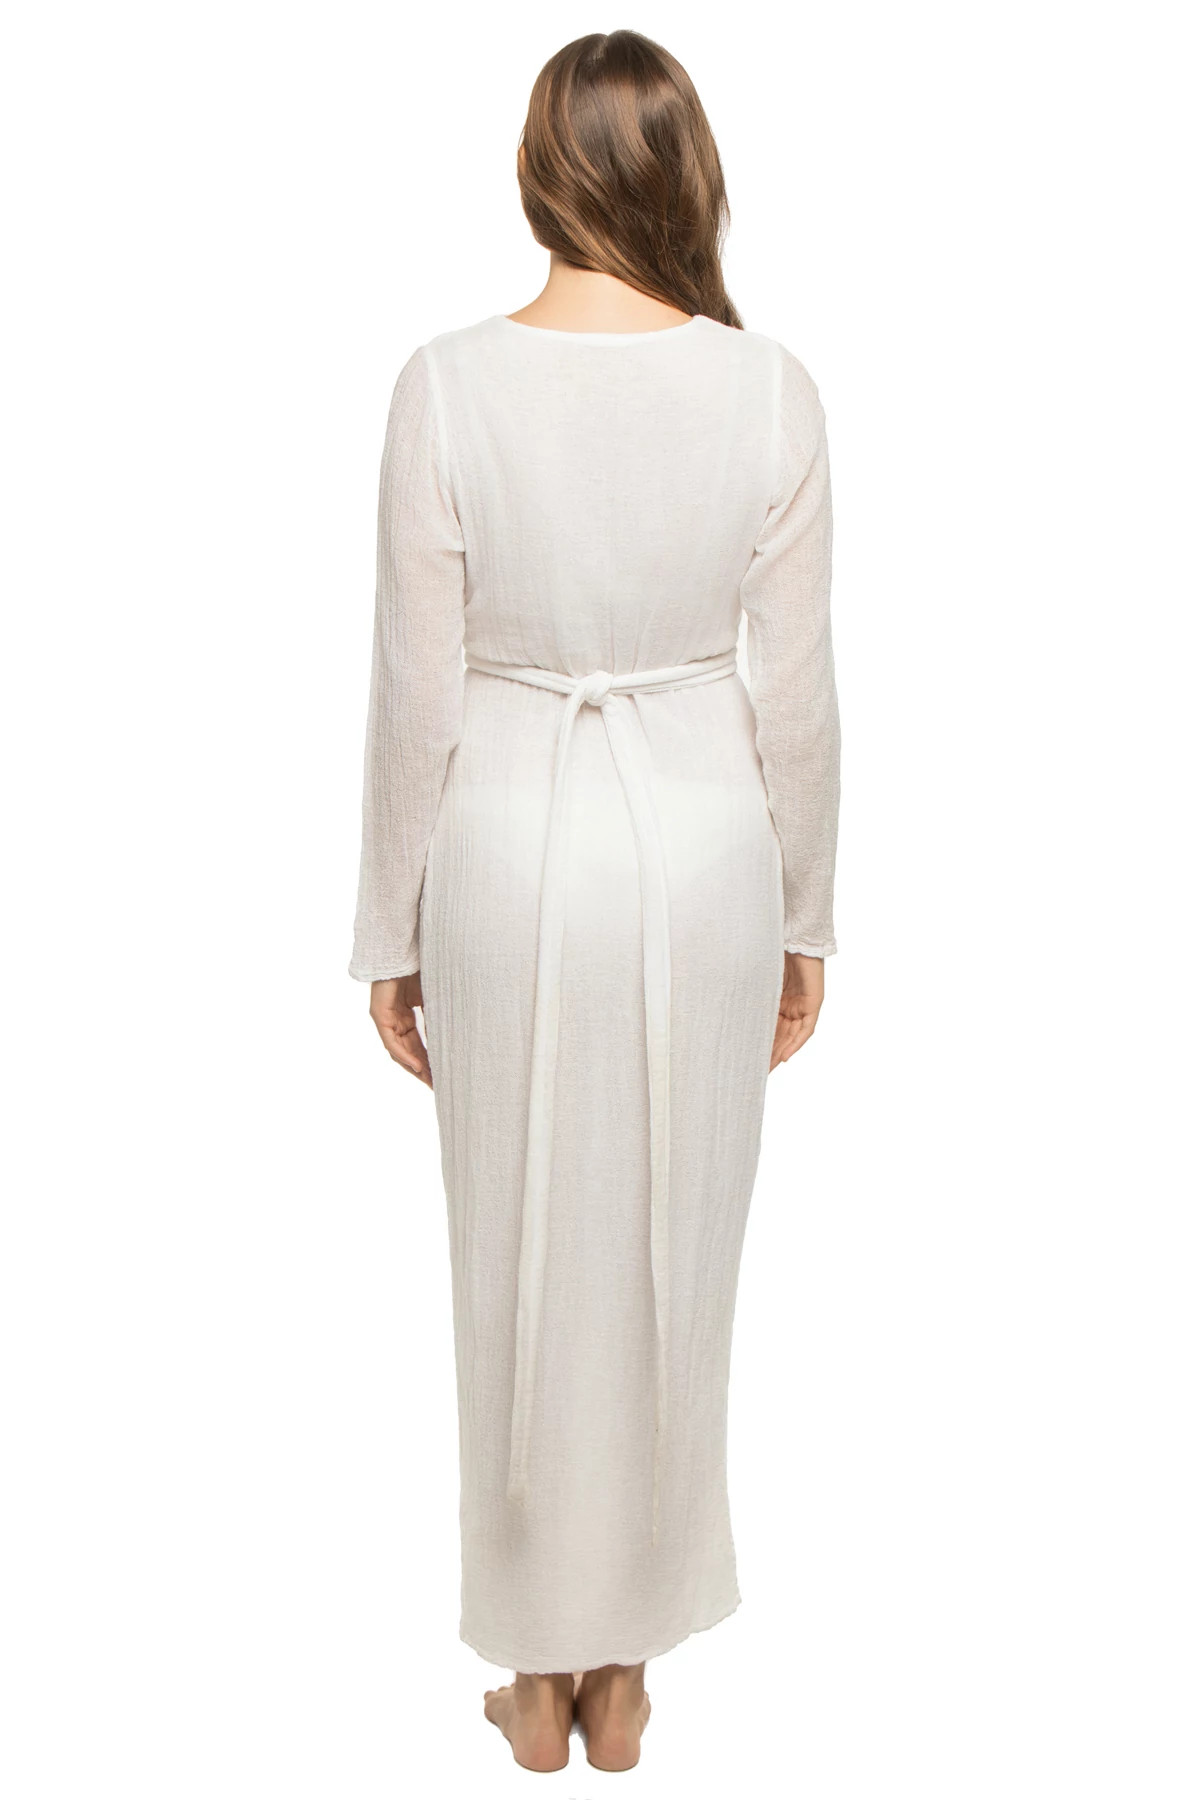 WHITE Horizon Midi Dress image number 2